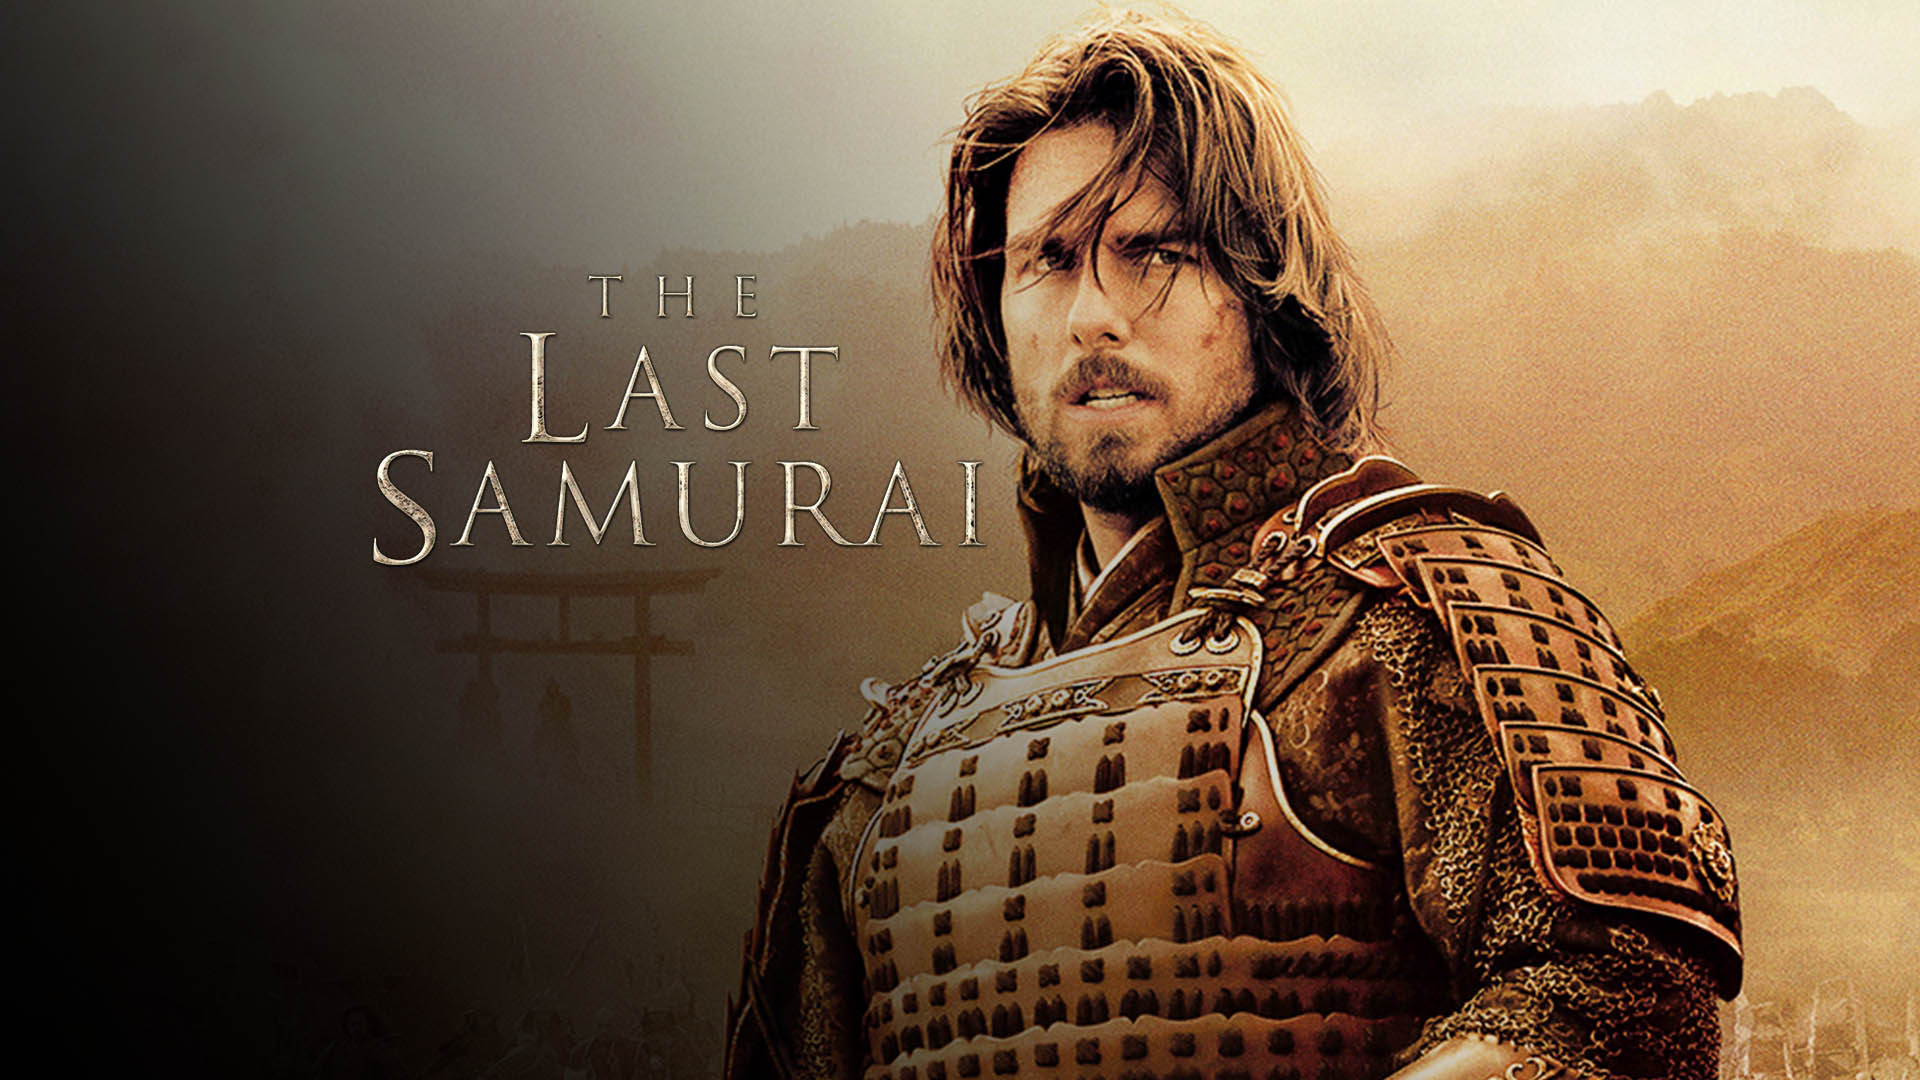 Watch The Last Samurai Online | Stream Full Movies